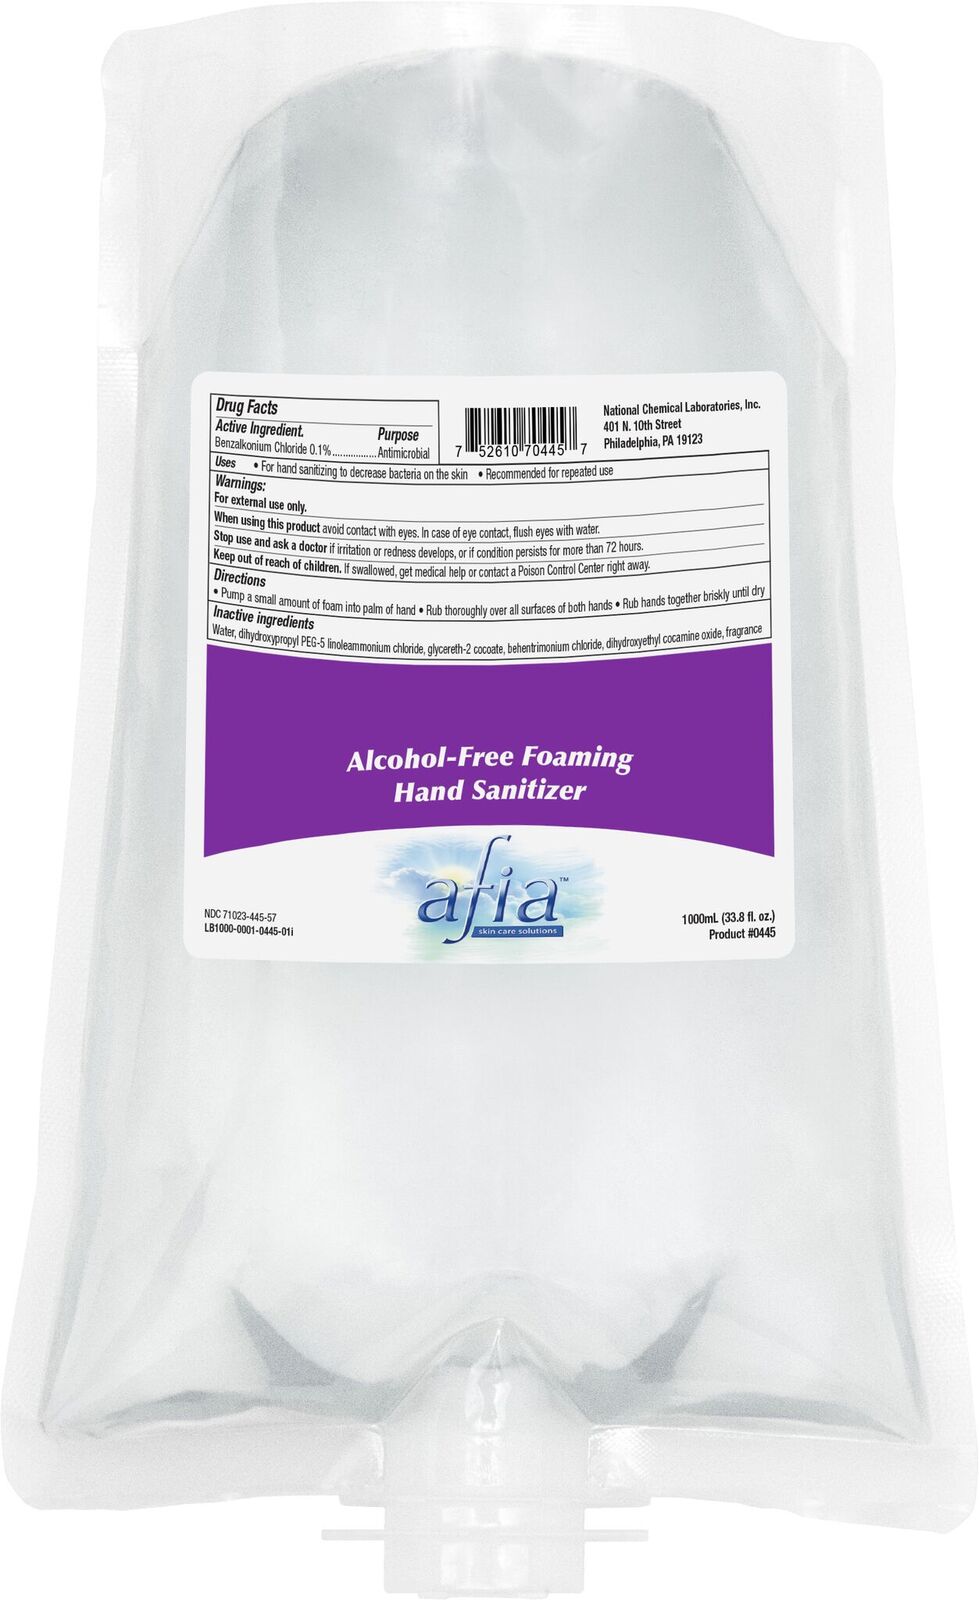 NCL afia Alcohol-Free Foaming Hand Sanitizer (6x1000ml)